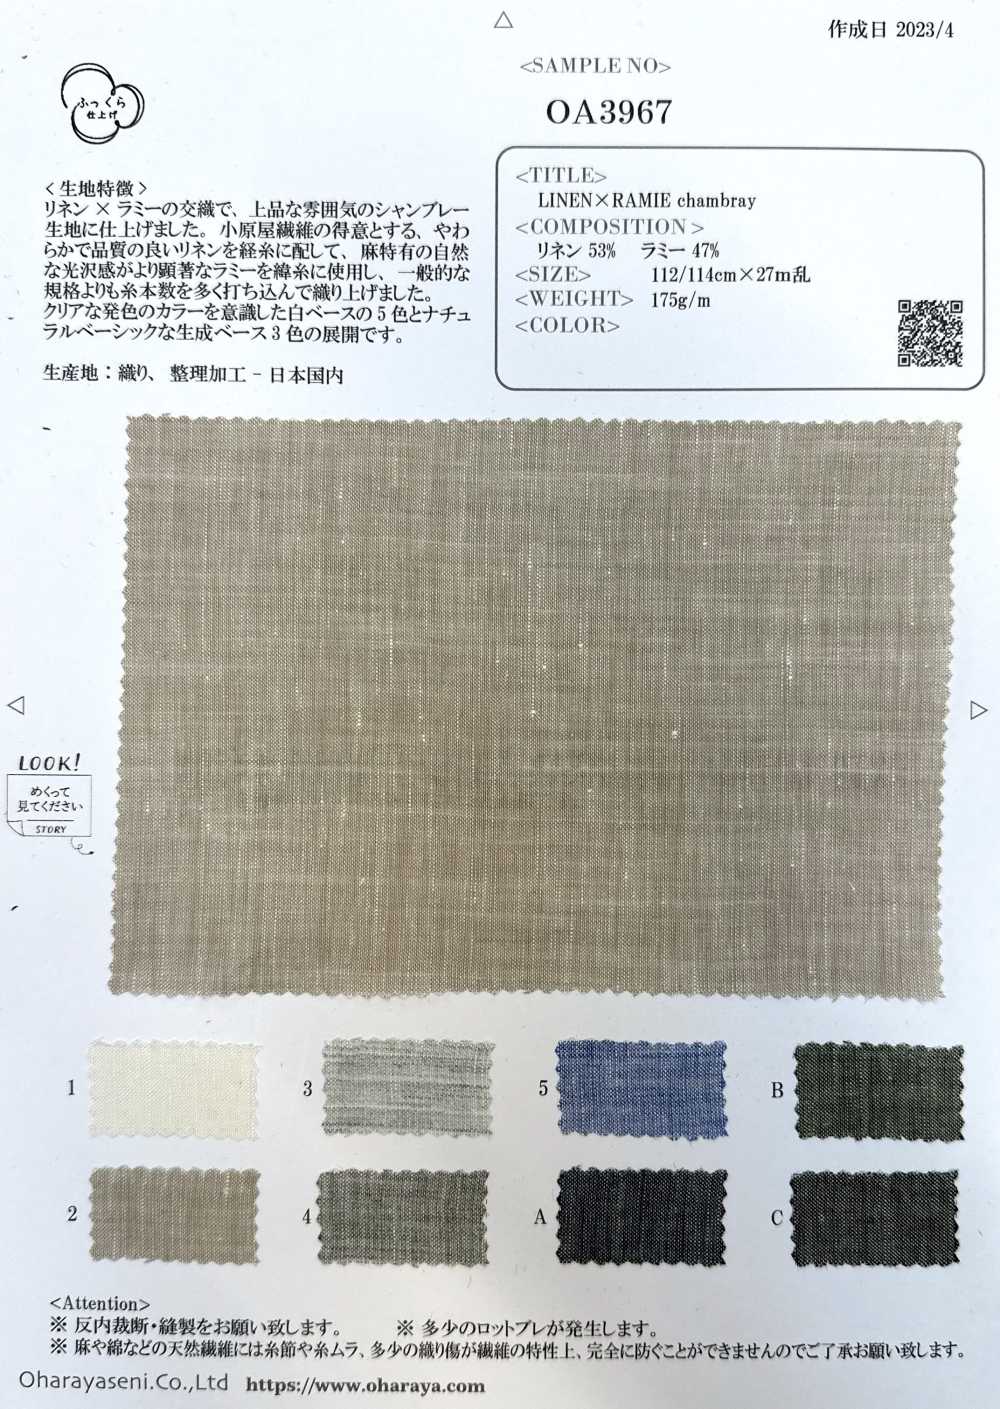 OA3967 LEINEN × RAMIE Chambray[Textilgewebe] Oharayaseni